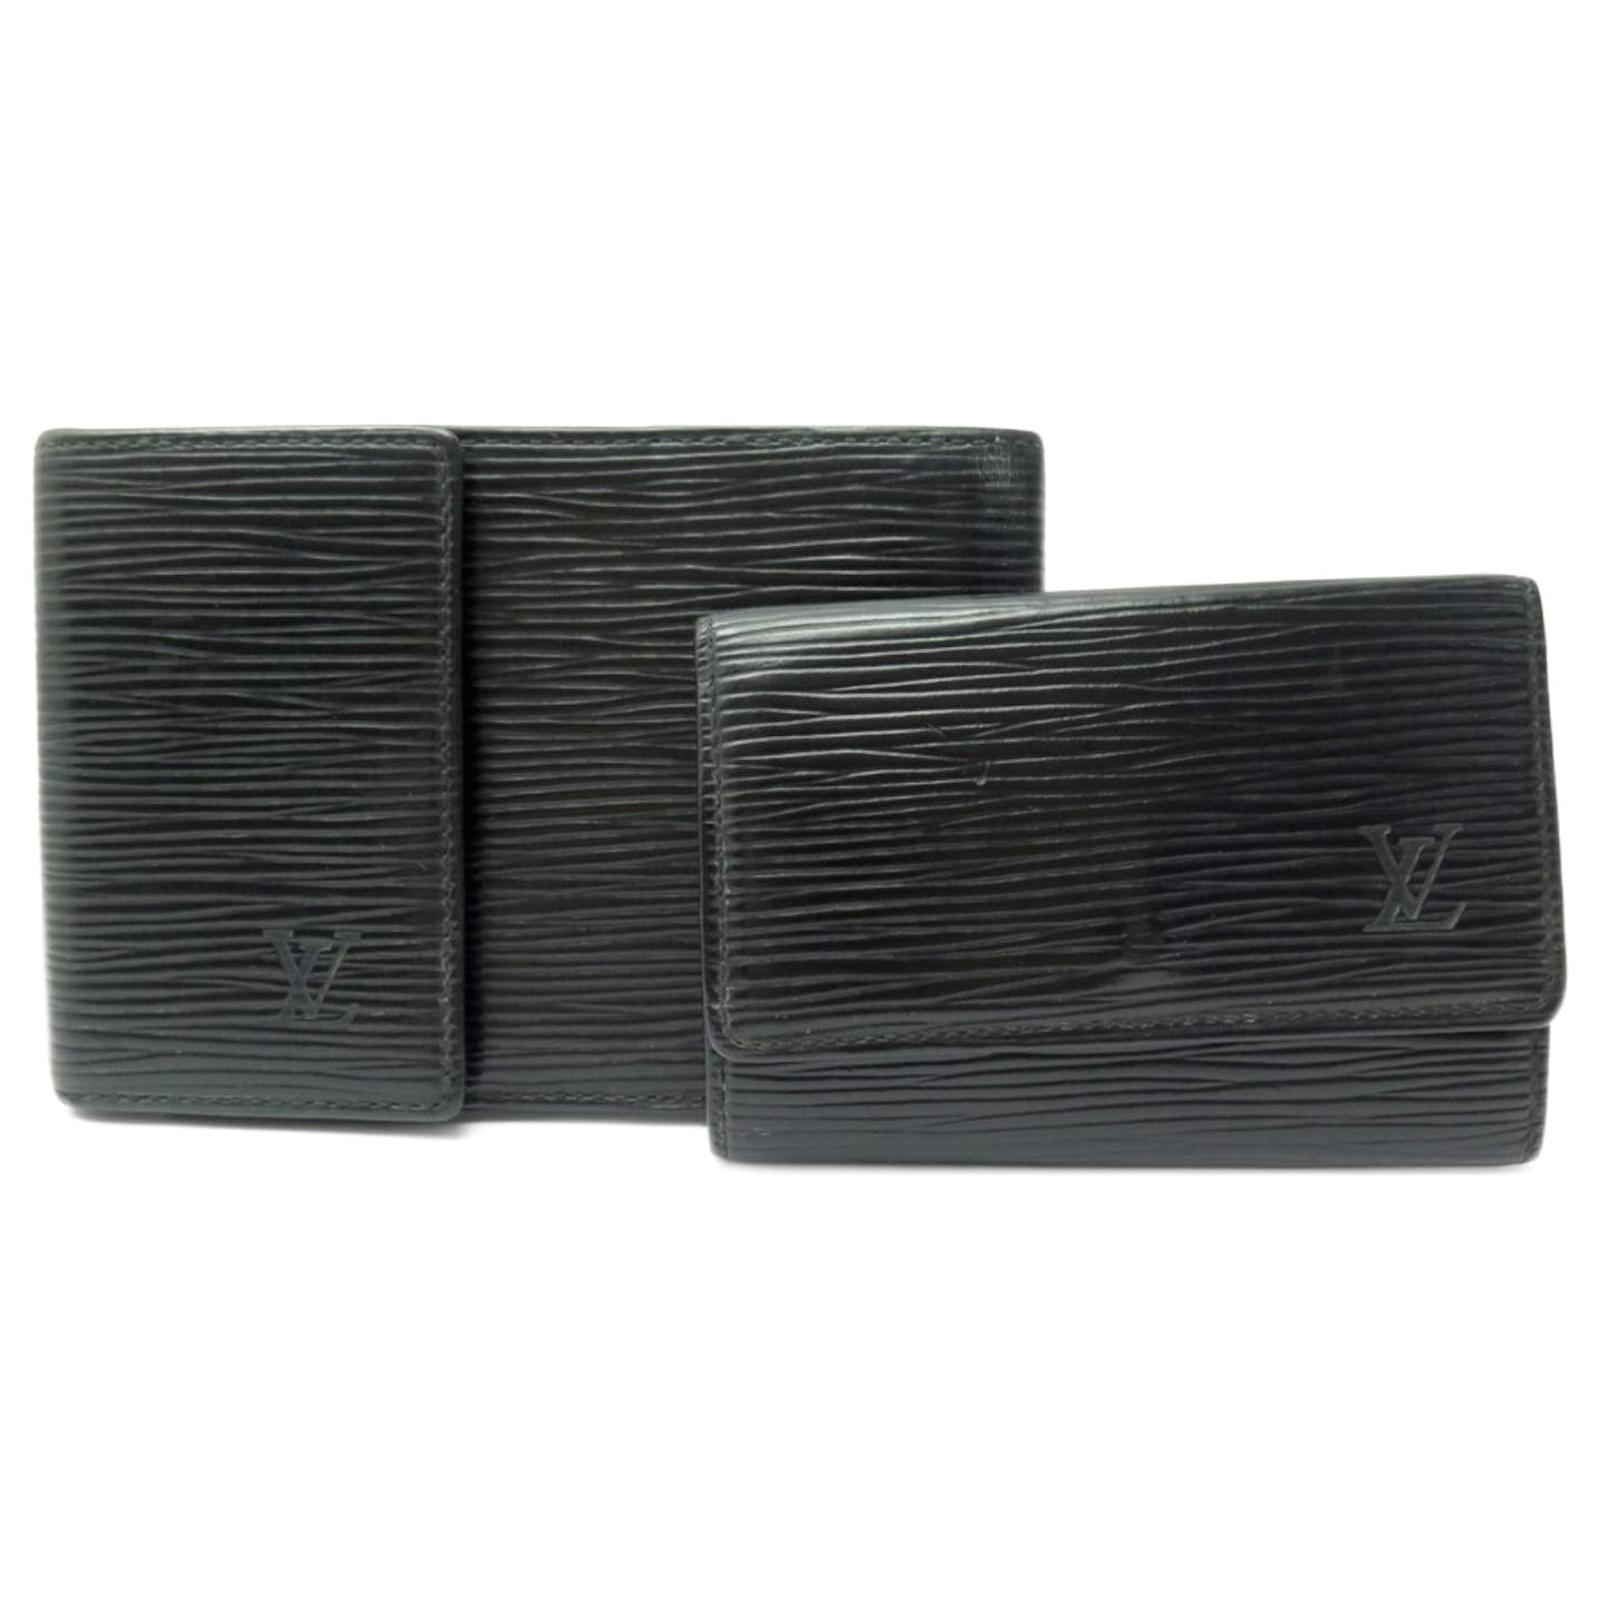 Louis Vuitton, Bags, Louis Vuitton Black Epi Leather 6 Key Holder